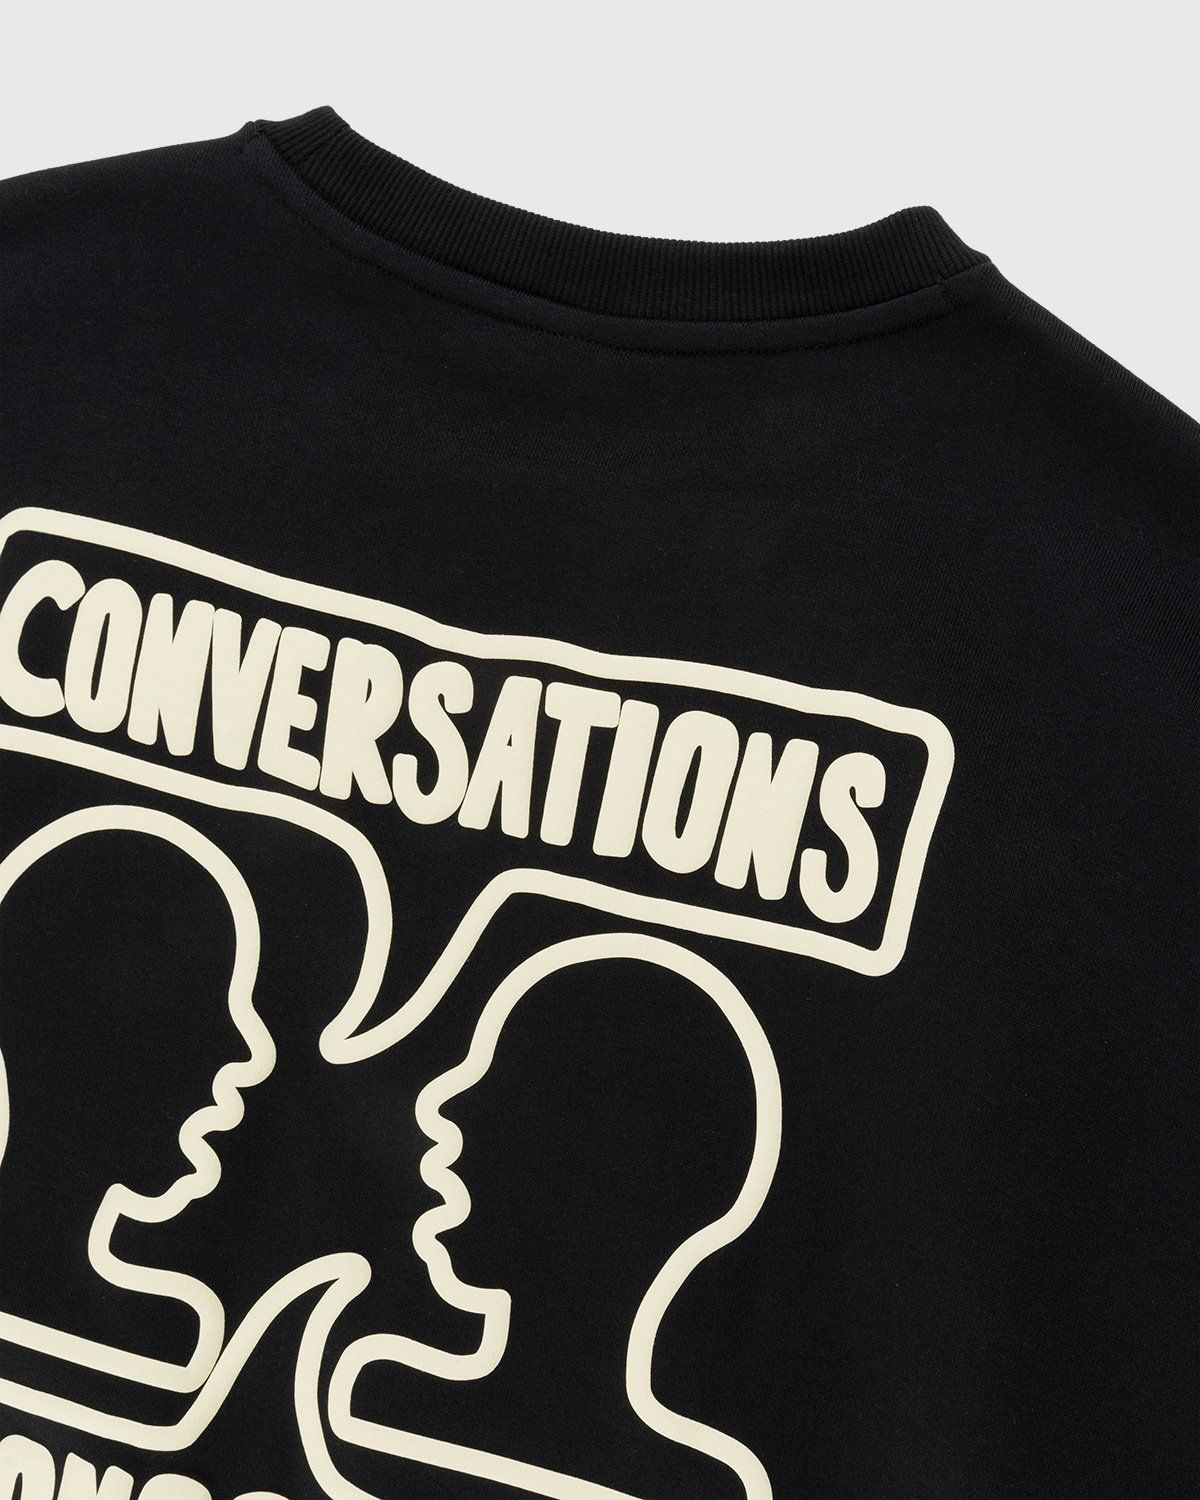 New Balance – Conversations Amongst Us Crew Black - Sweatshirts - Black - Image 5